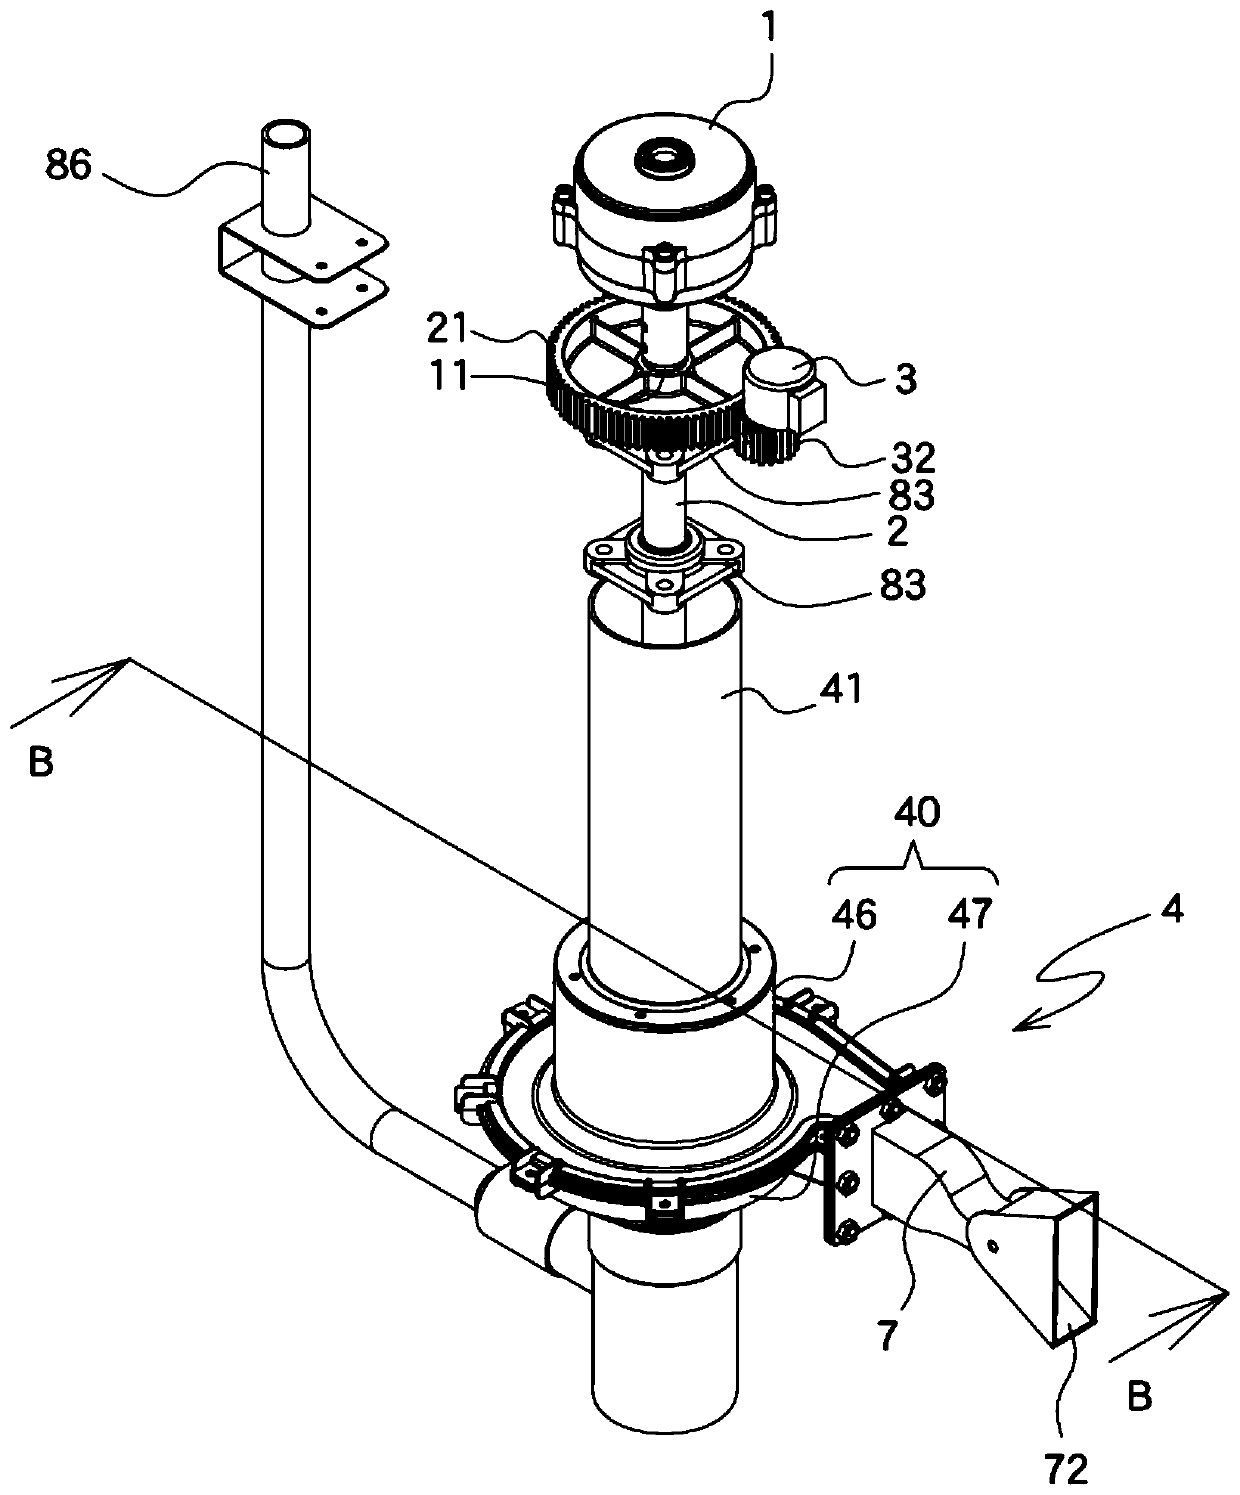 Multi-angle rotating liquid-gas mixing device